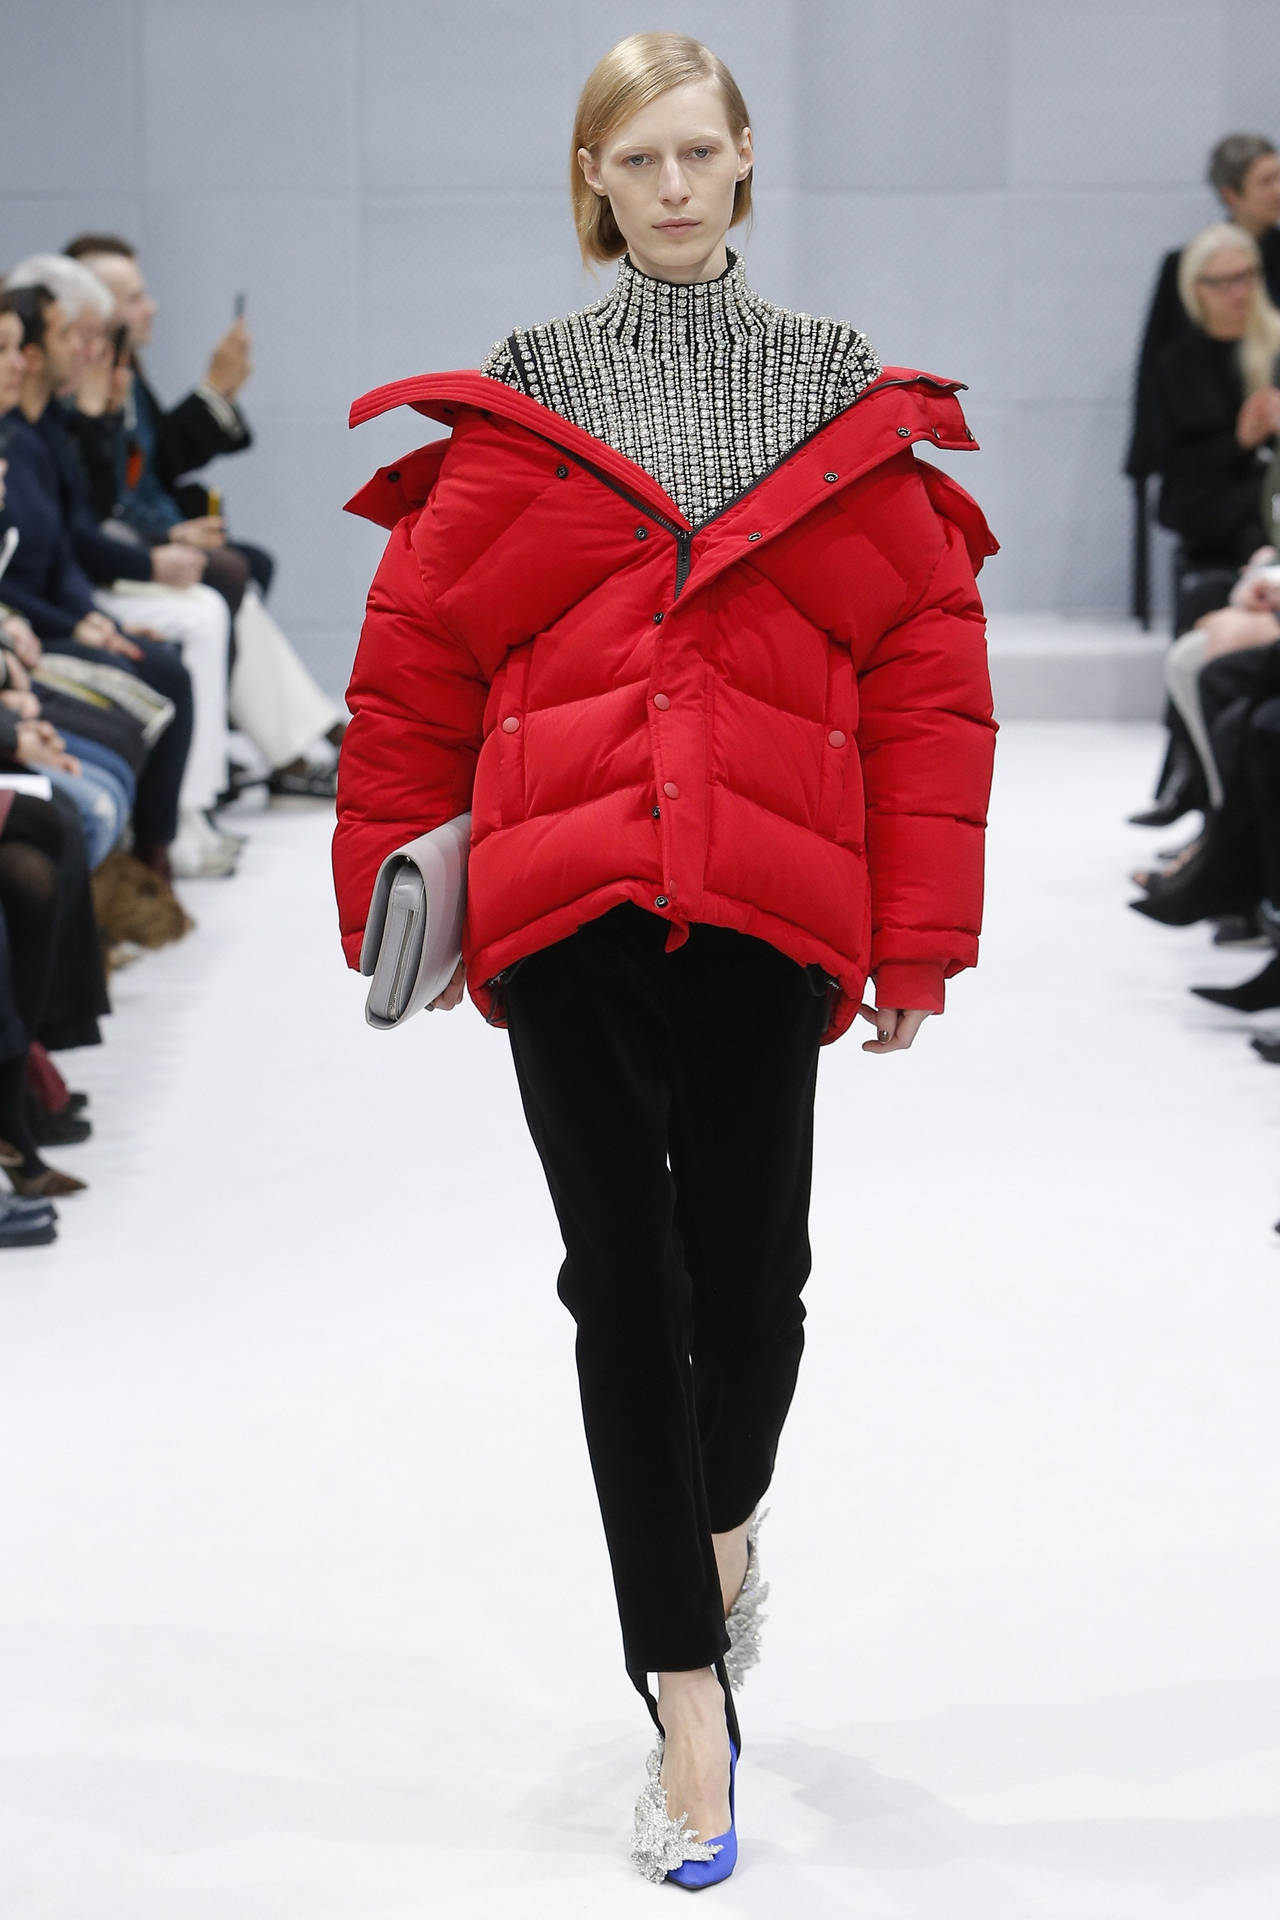 Model In Balenciaga Red Jacket